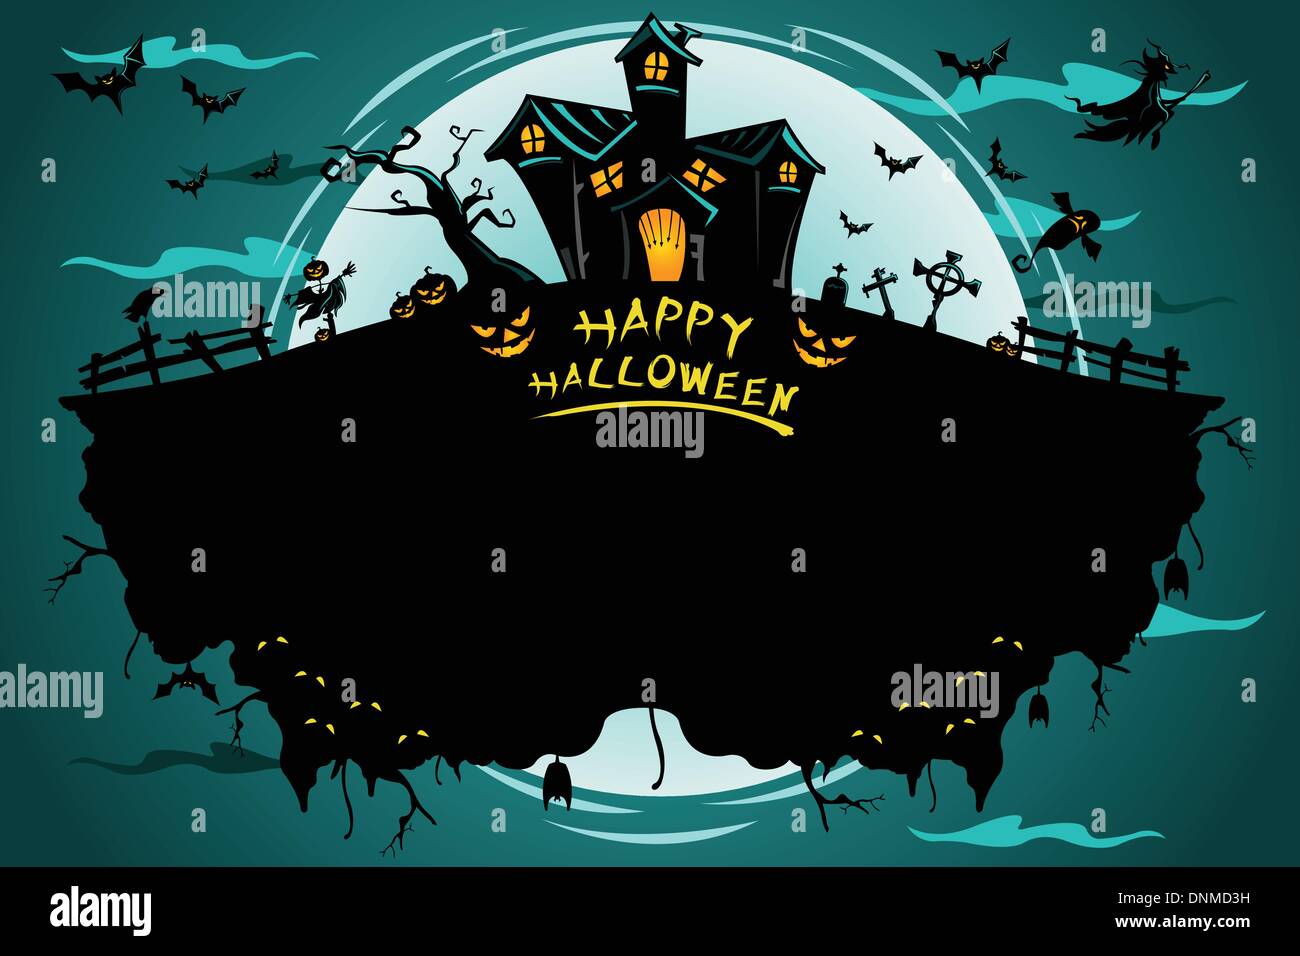 A vector illustration of Halloween poster design Stock Vector